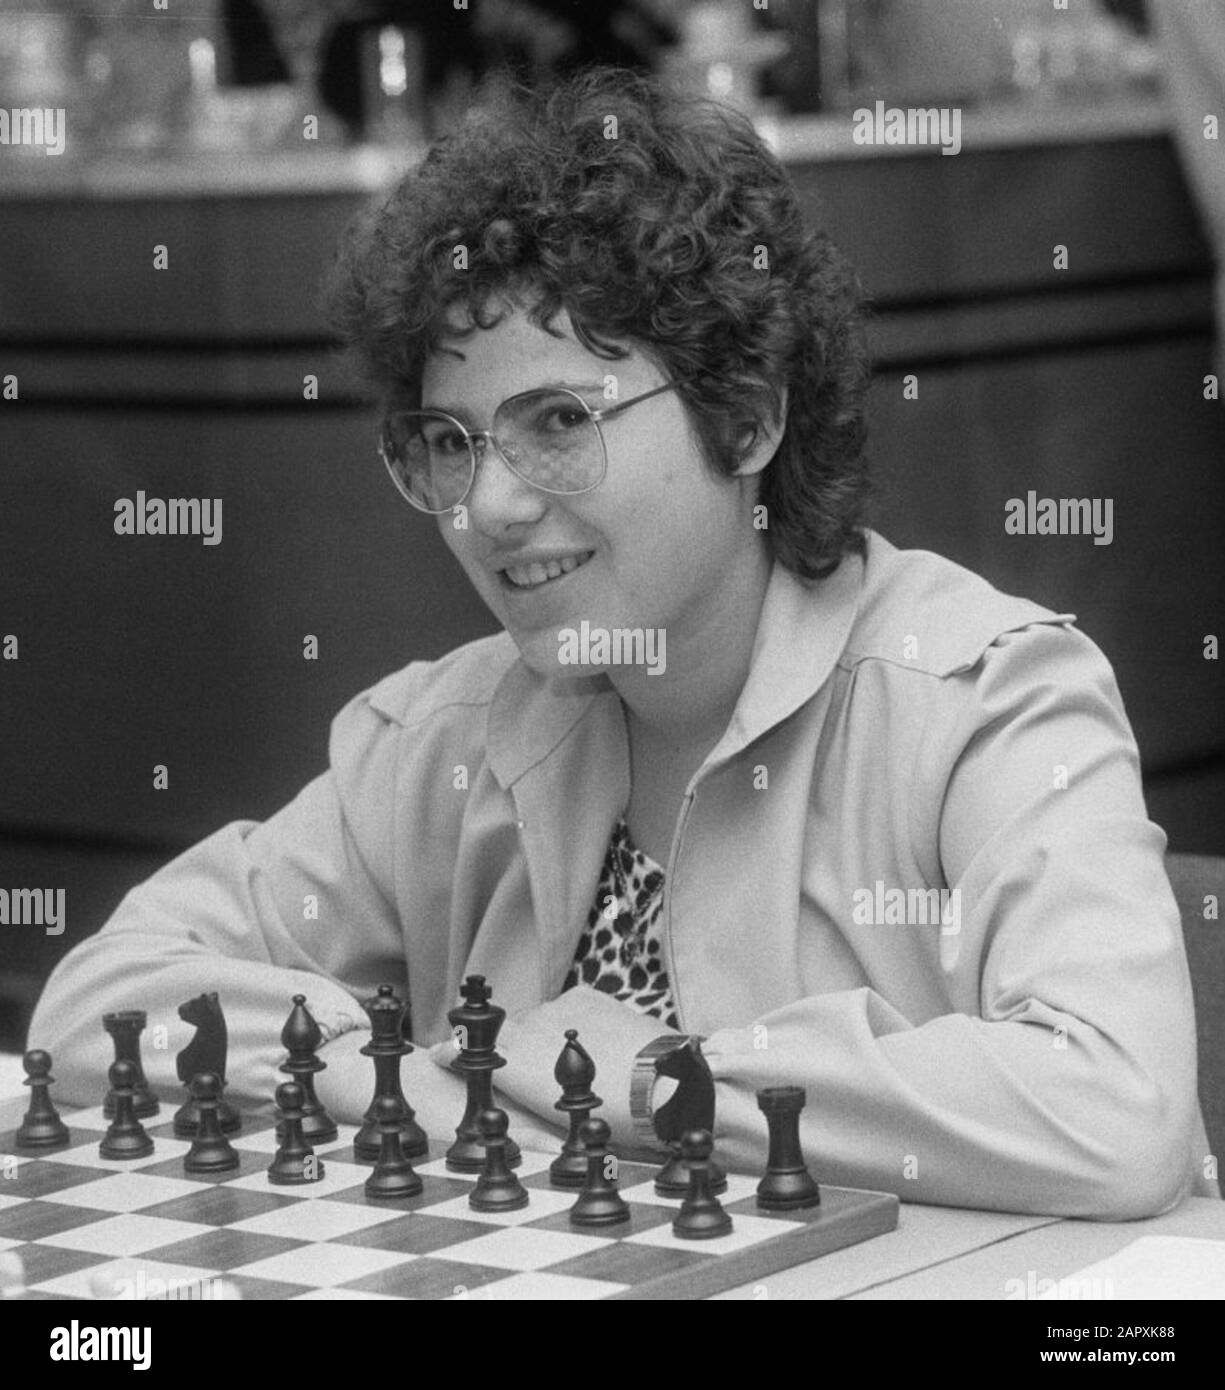 Image of Chess player Judit Polgár, July 1997 (photo)